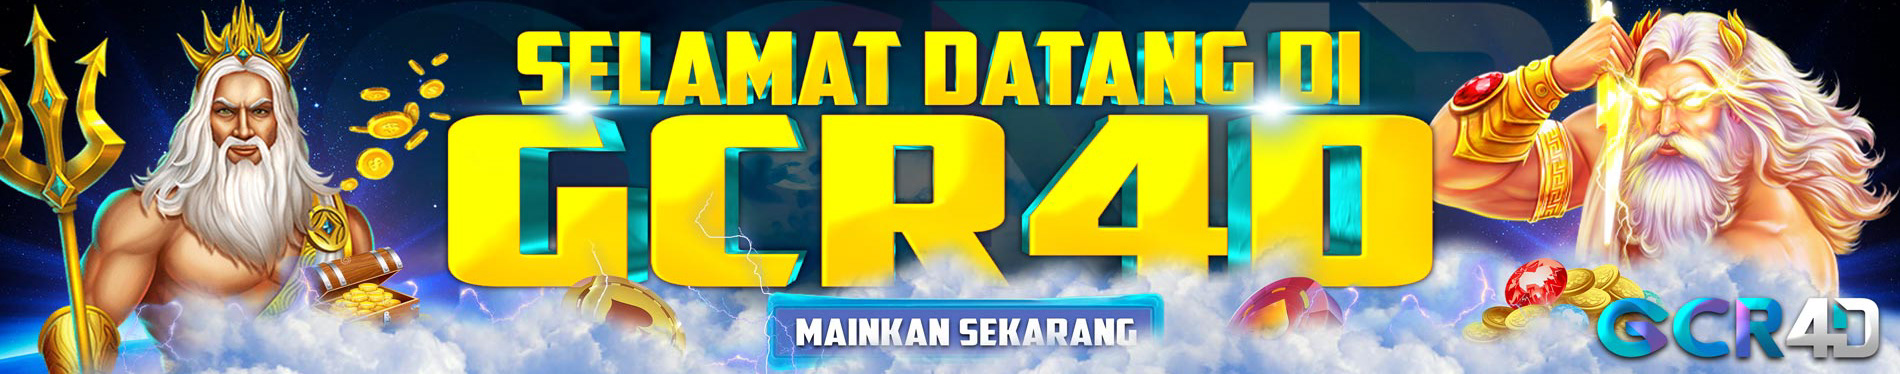 GCR4D Link's profile banner